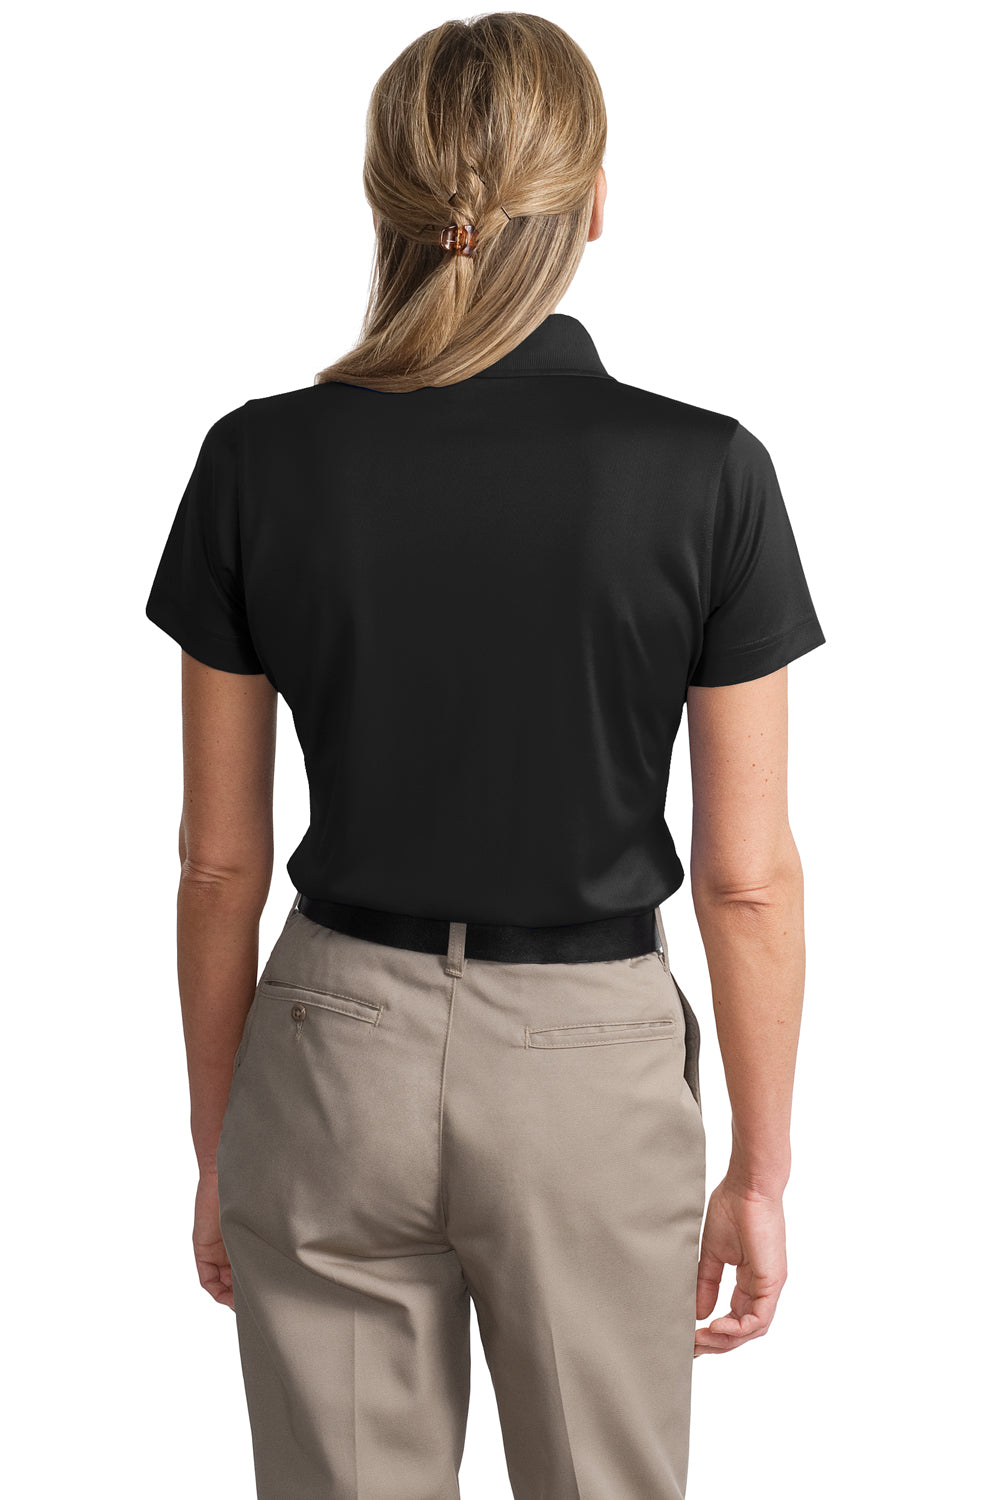 CornerStone CS413 Womens Select Moisture Wicking Short Sleeve Polo Shirt Black Back